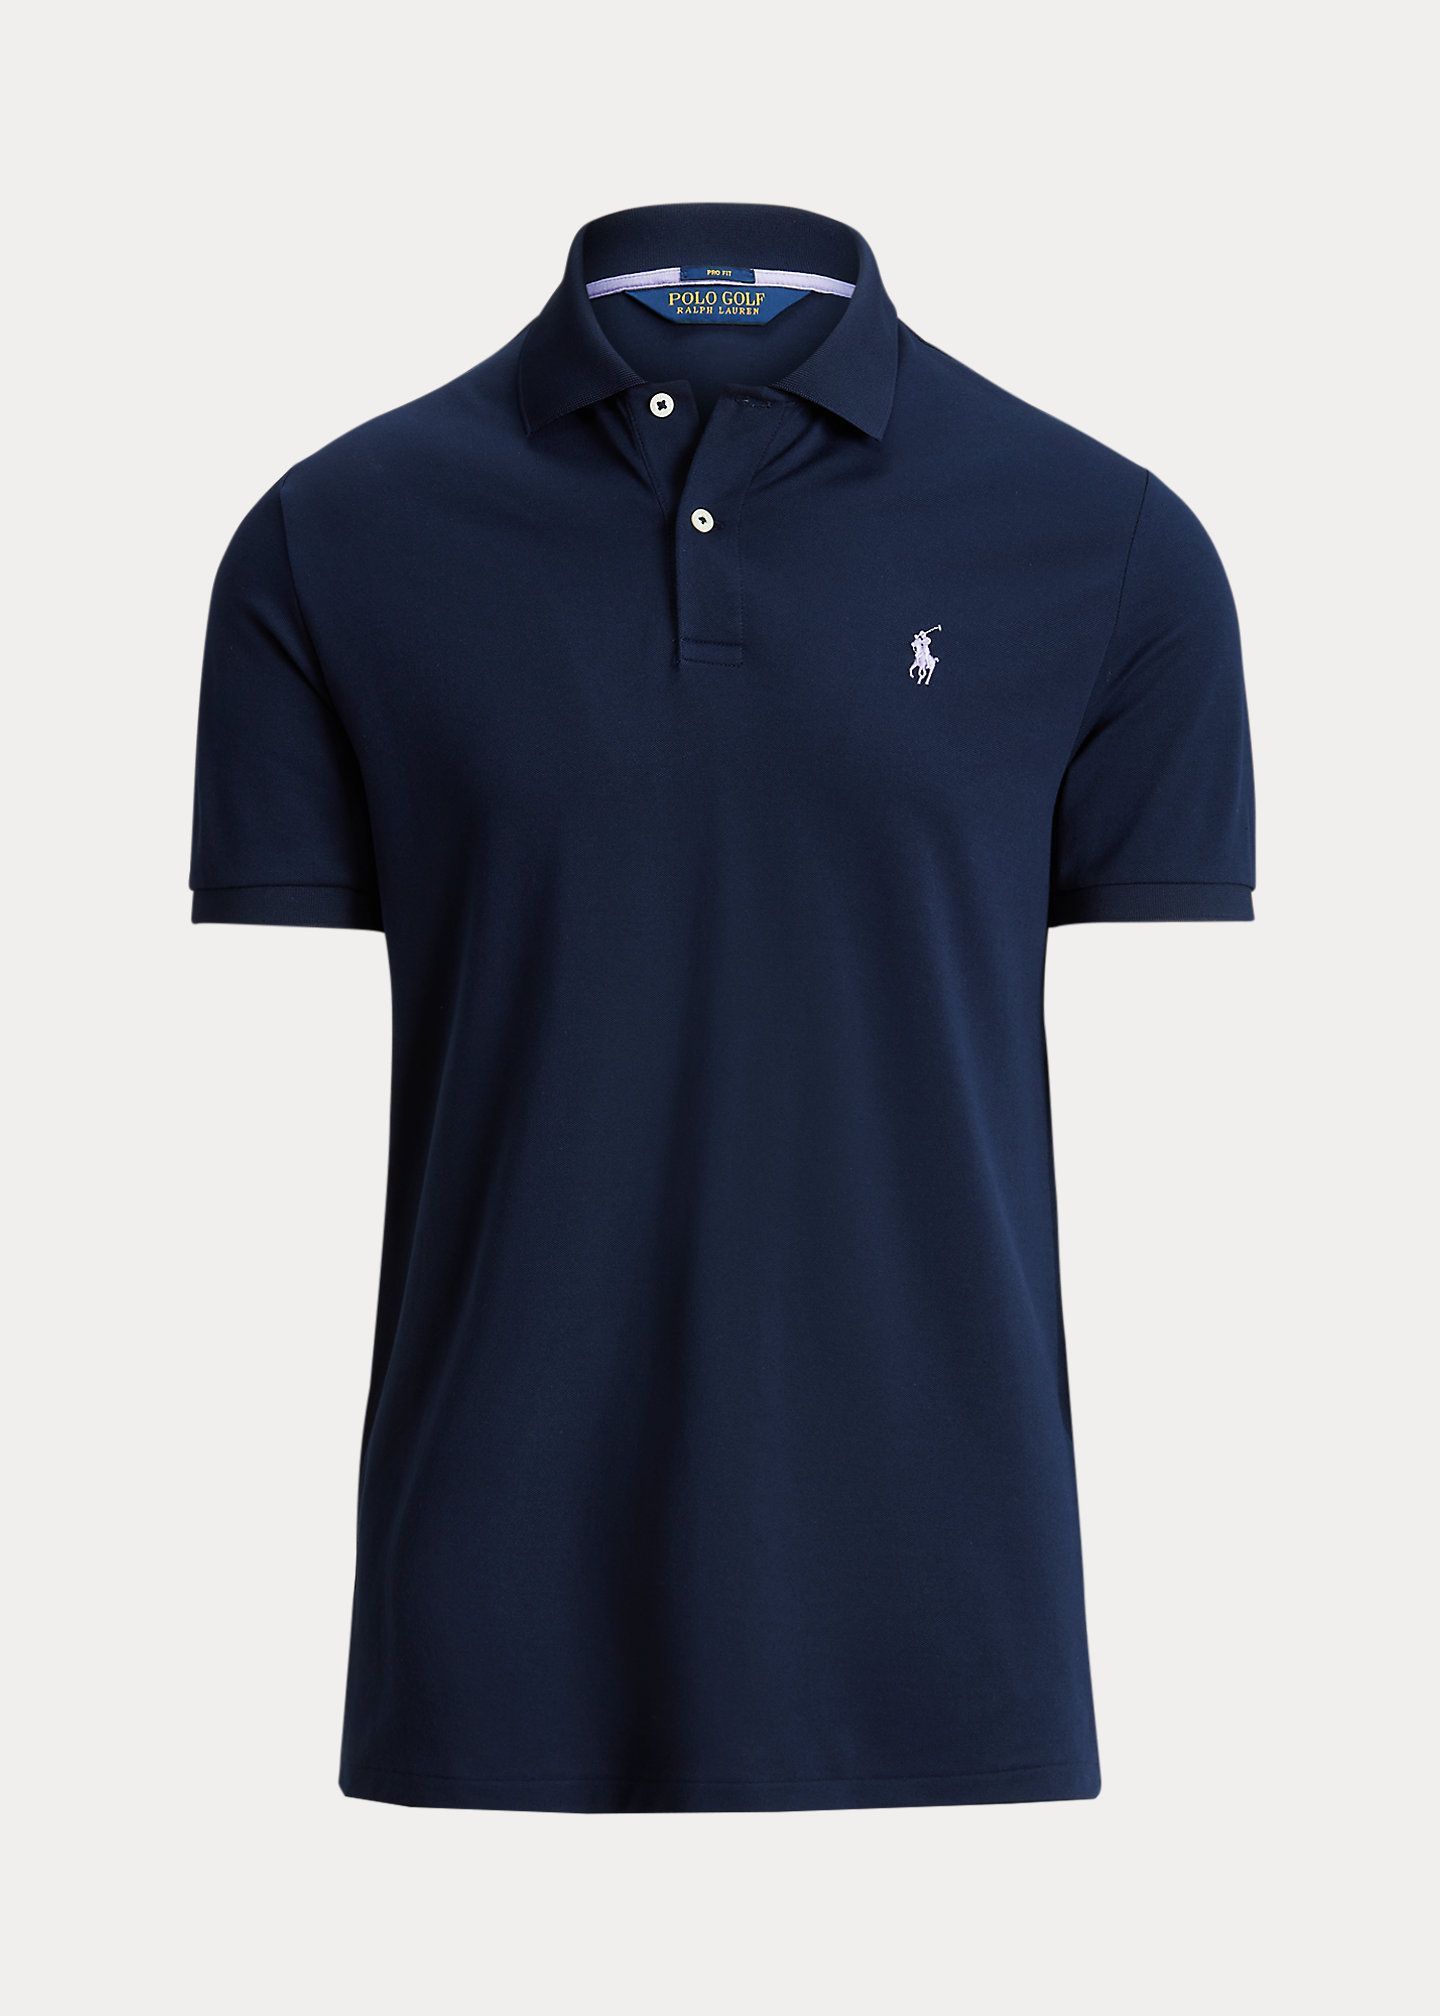 40 Best Golf Clothing Brands for Men in 